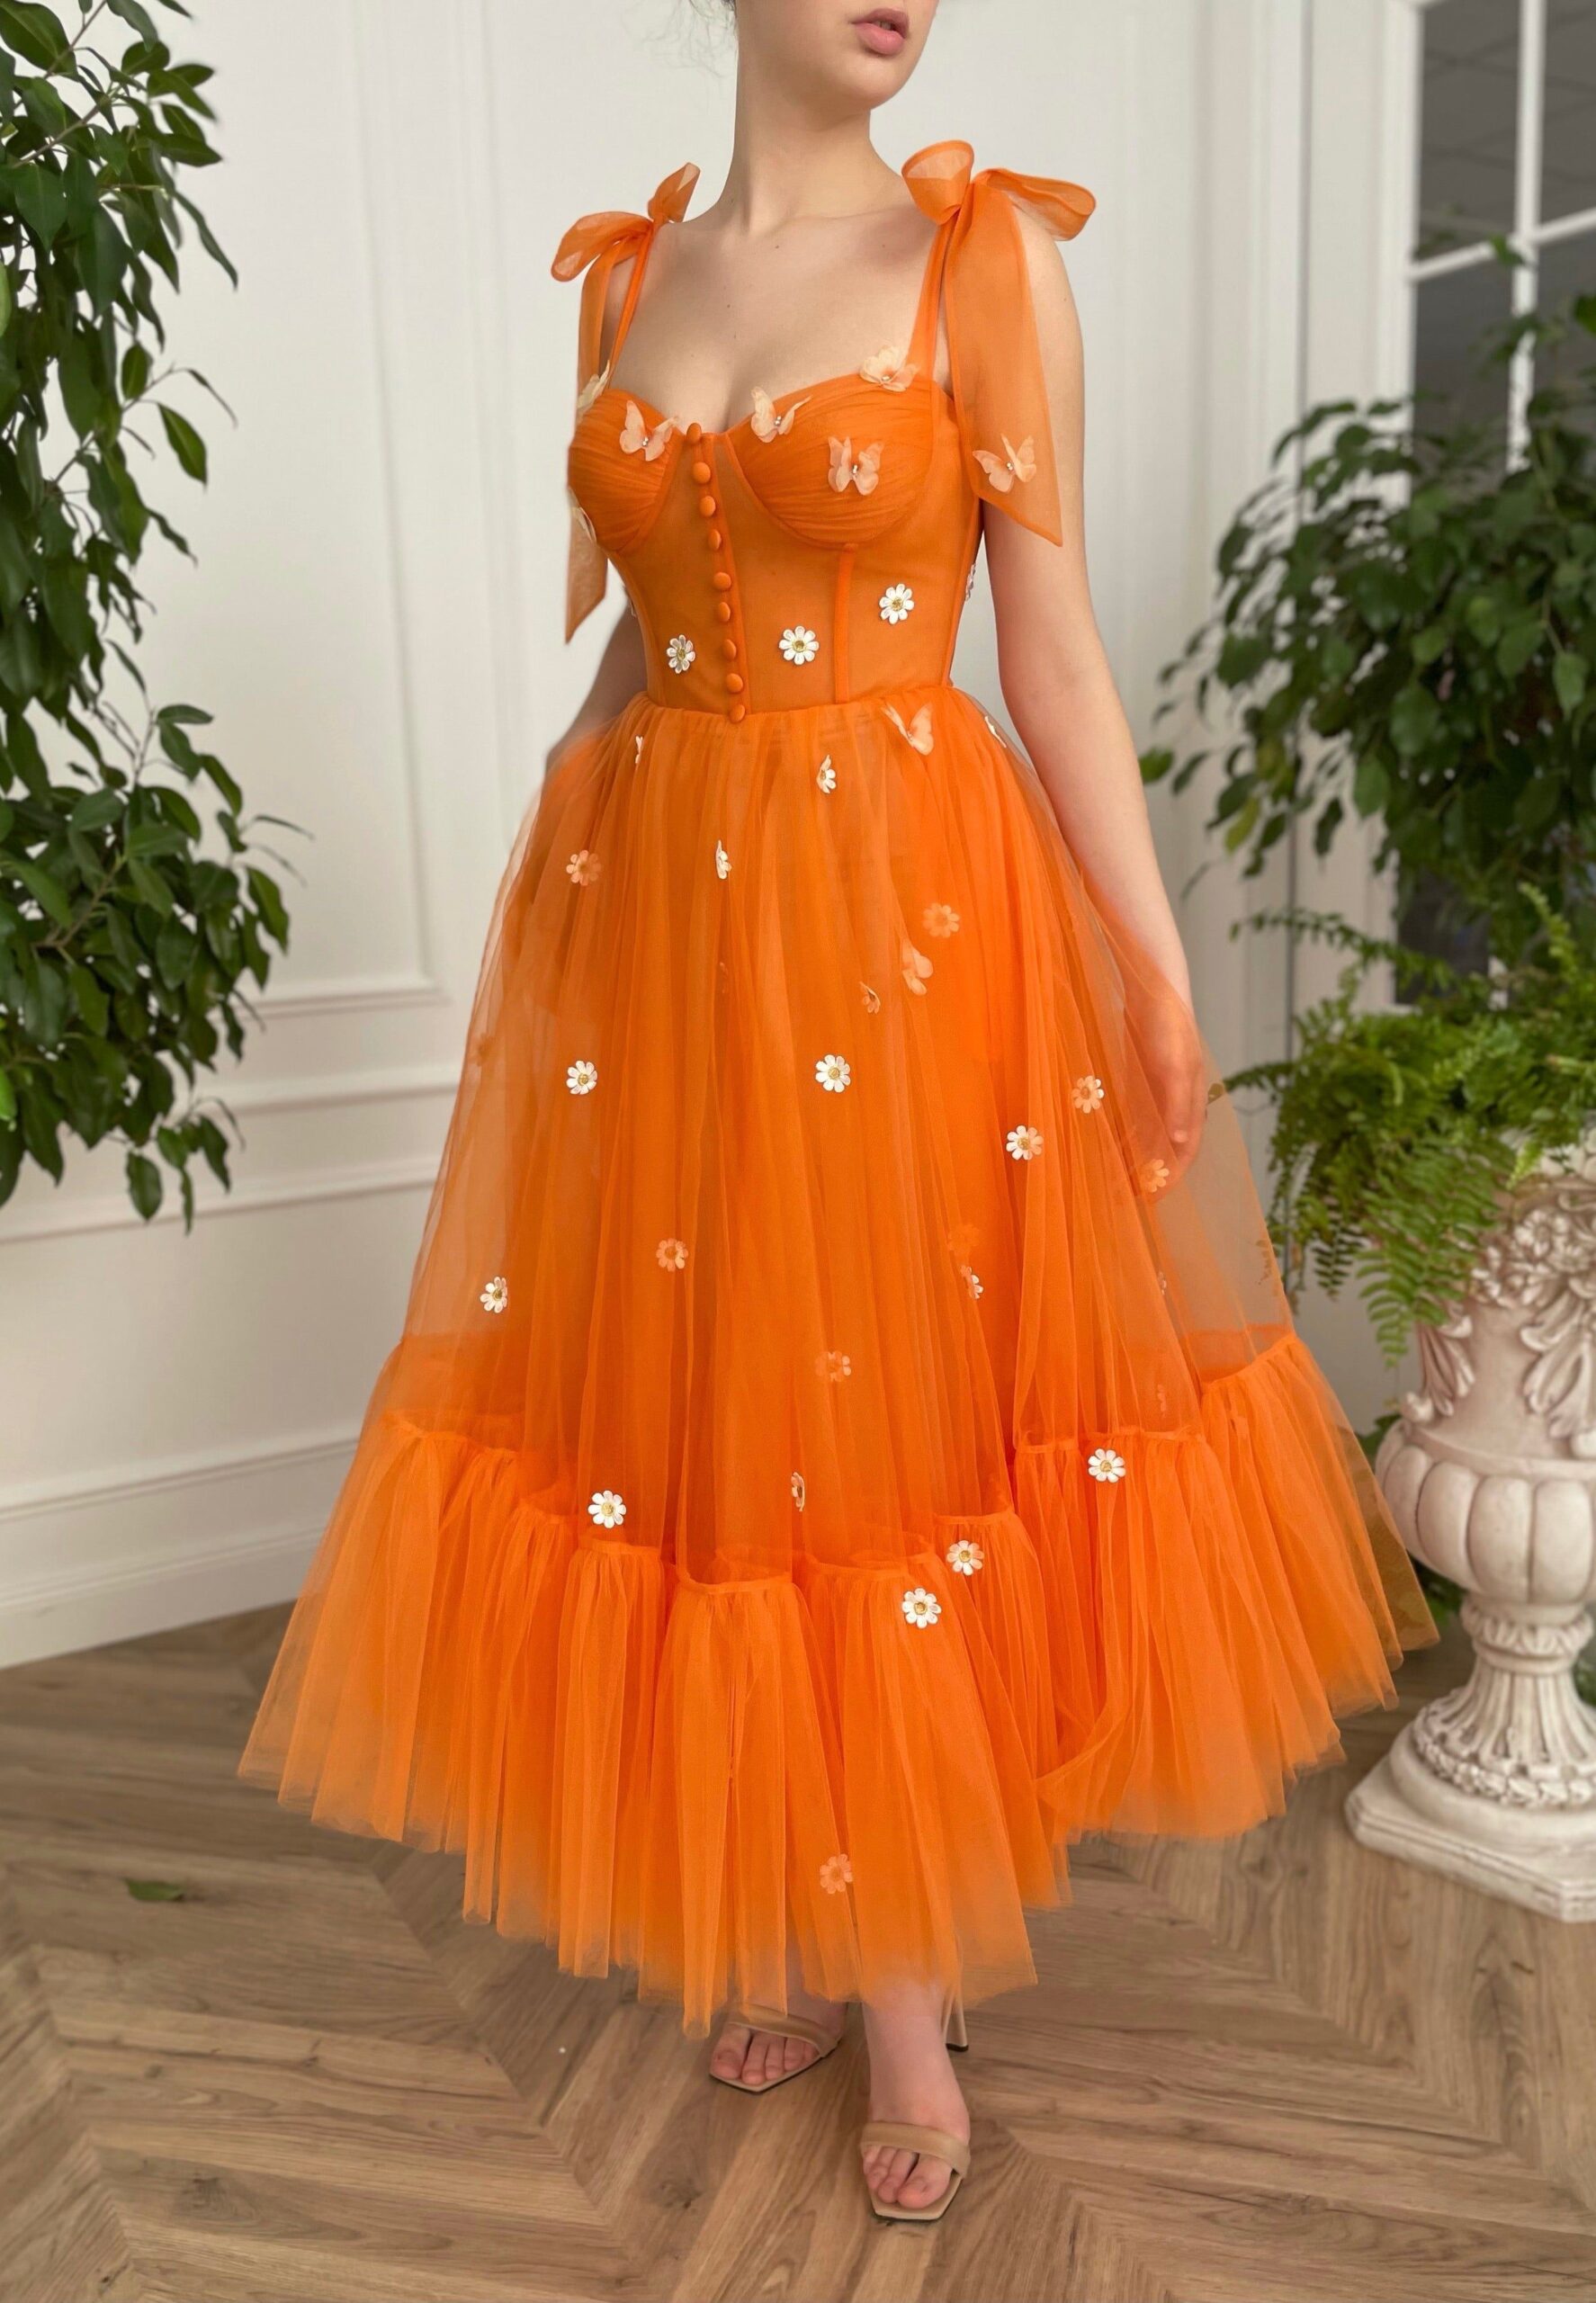 Vibrant Orange Dresses for Statement Style